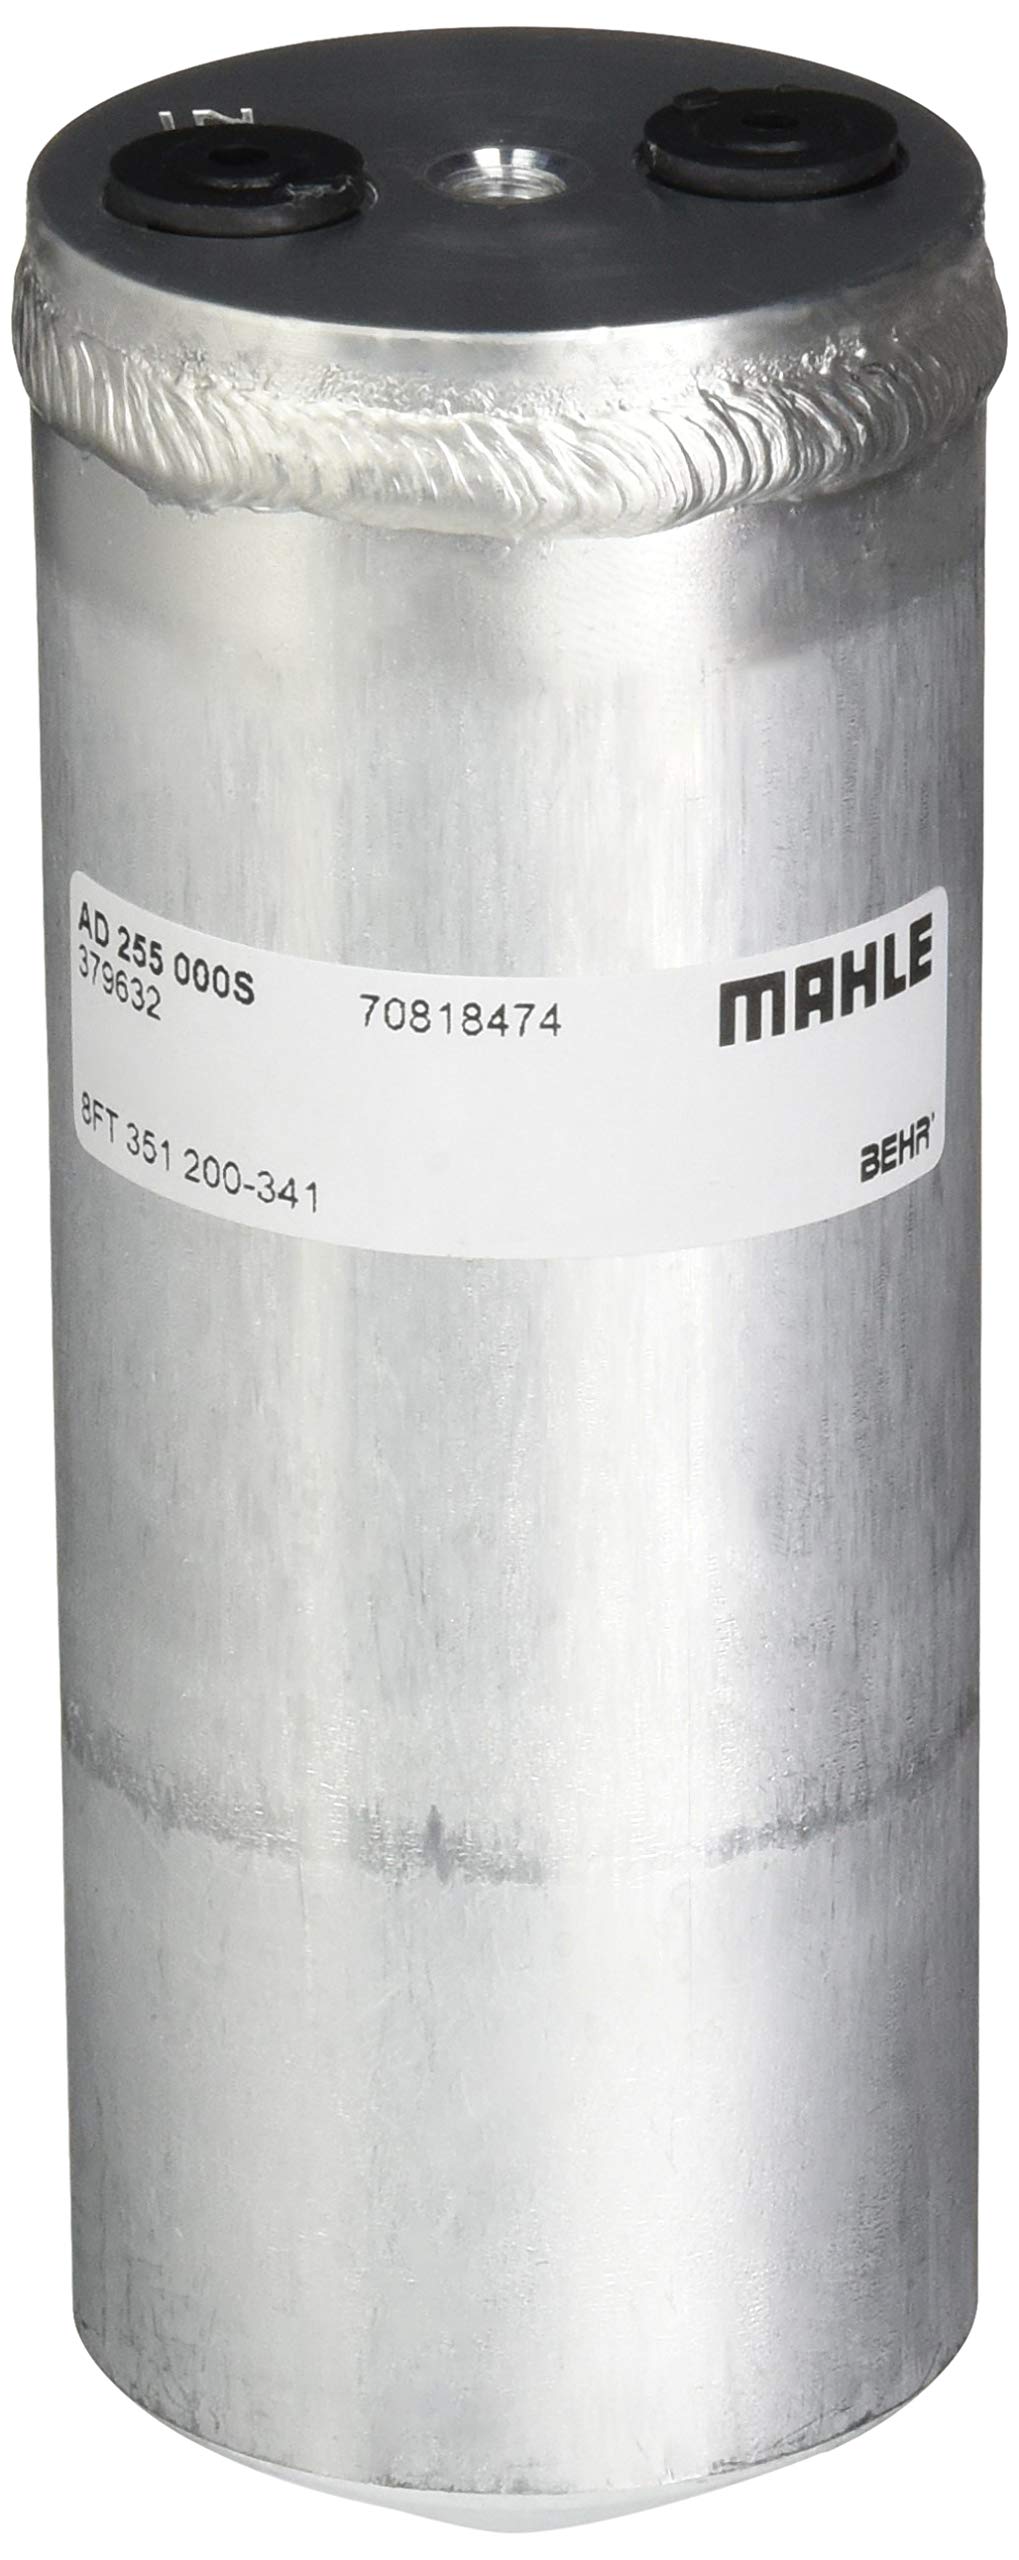 MAHLE AD 255 000S Filter-Trockner und Akkumulator BEHR von MAHLE